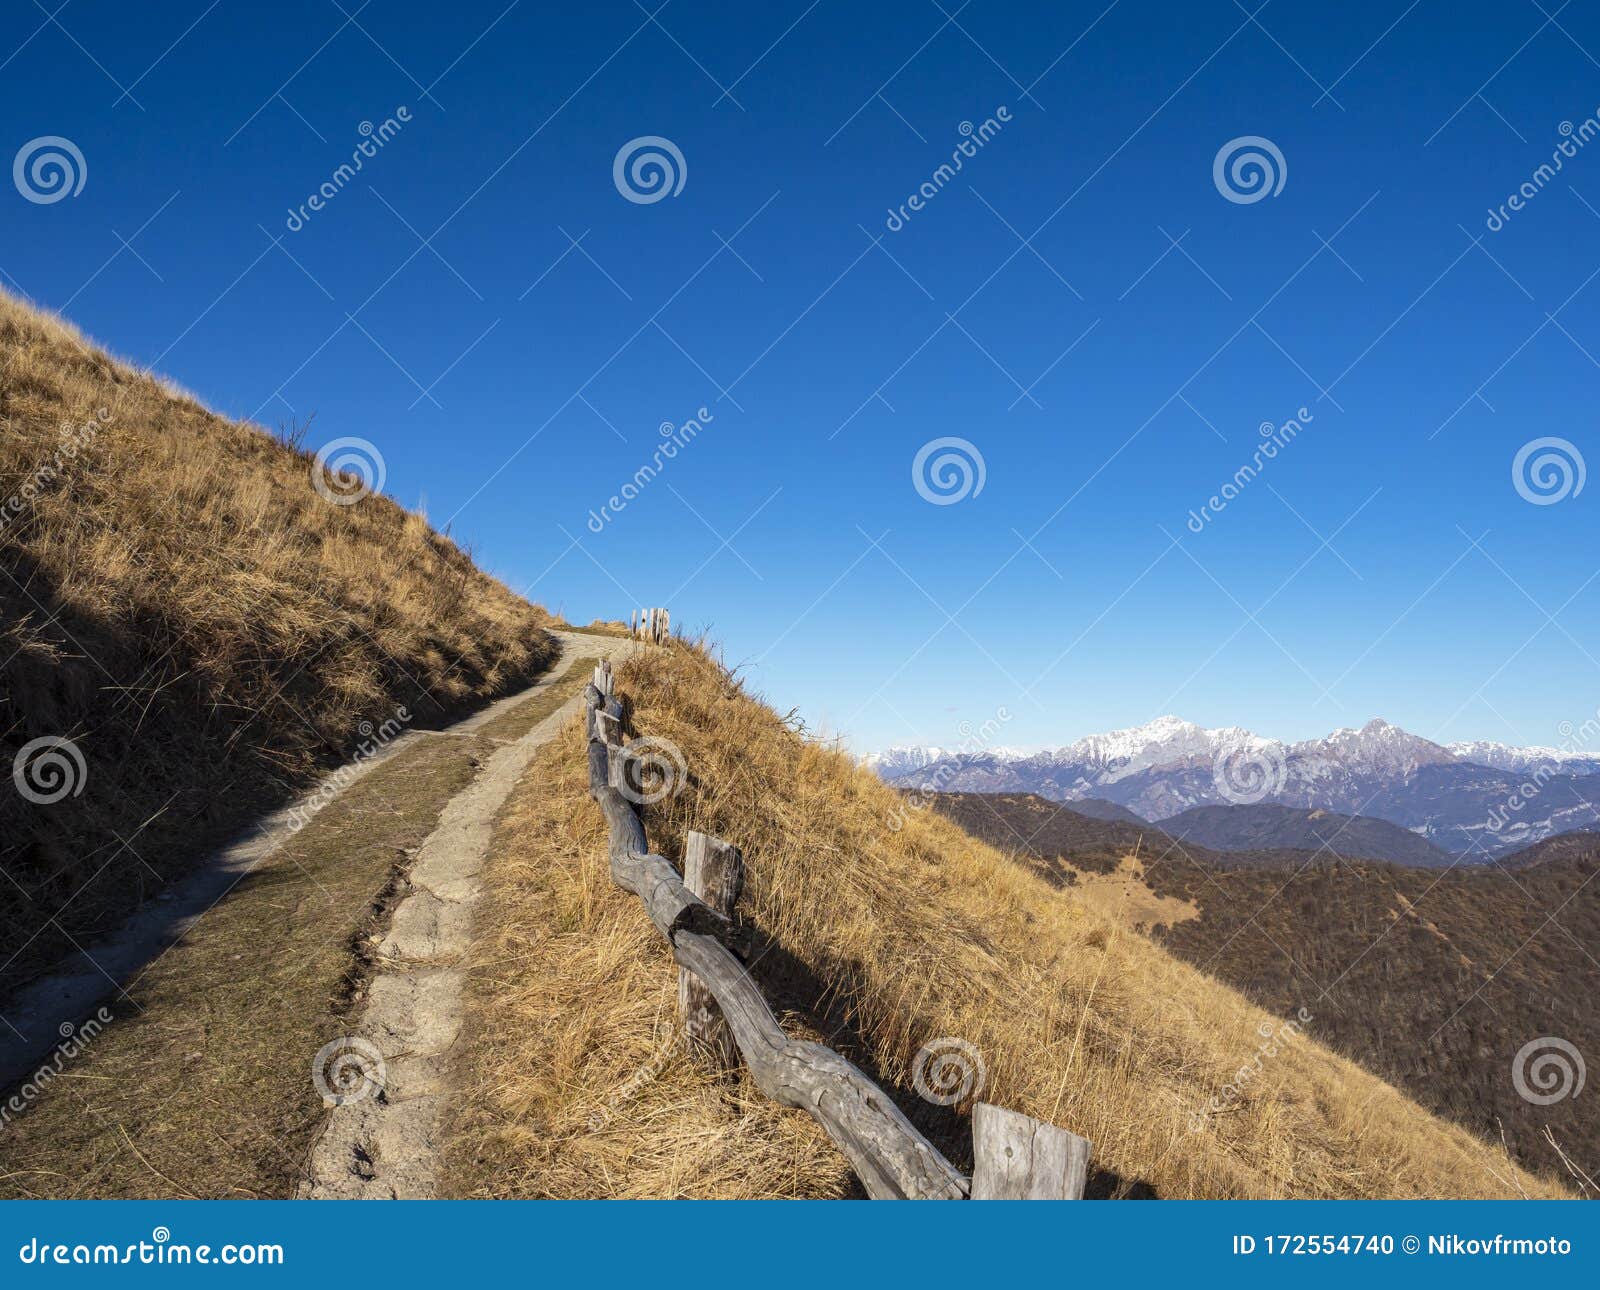 alpine trail on mount bolettone in the italian alps